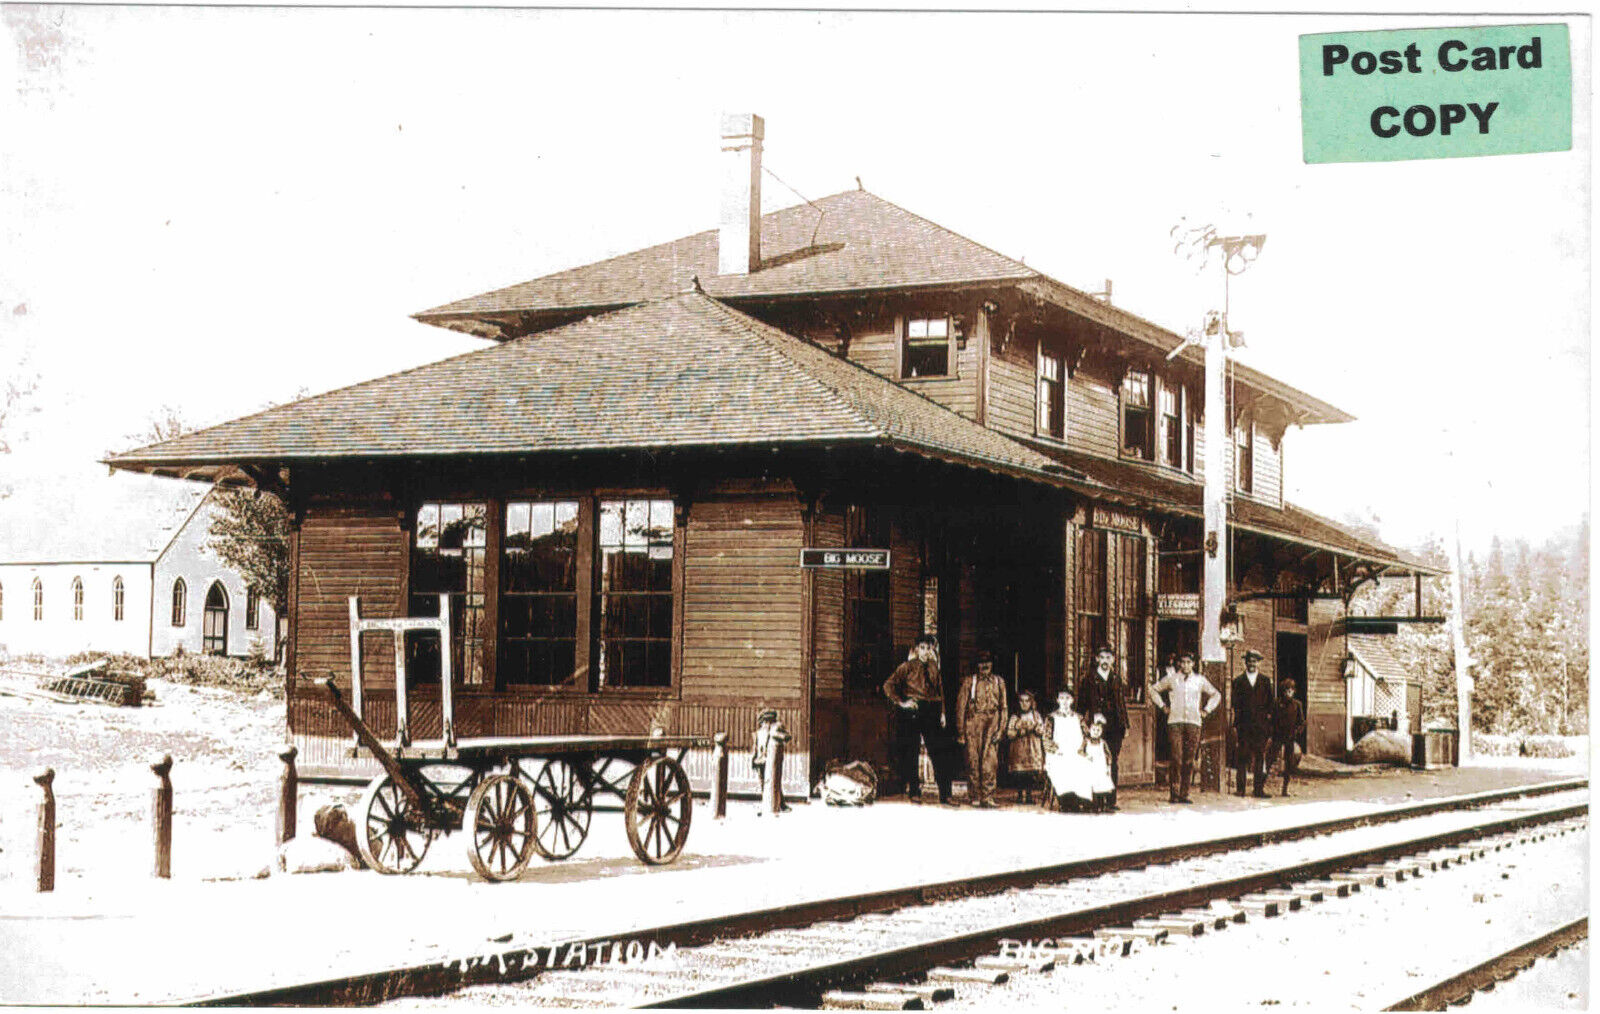 New York Central Railroad Depot (train station) at Big Moose, Herkimer Co., NY